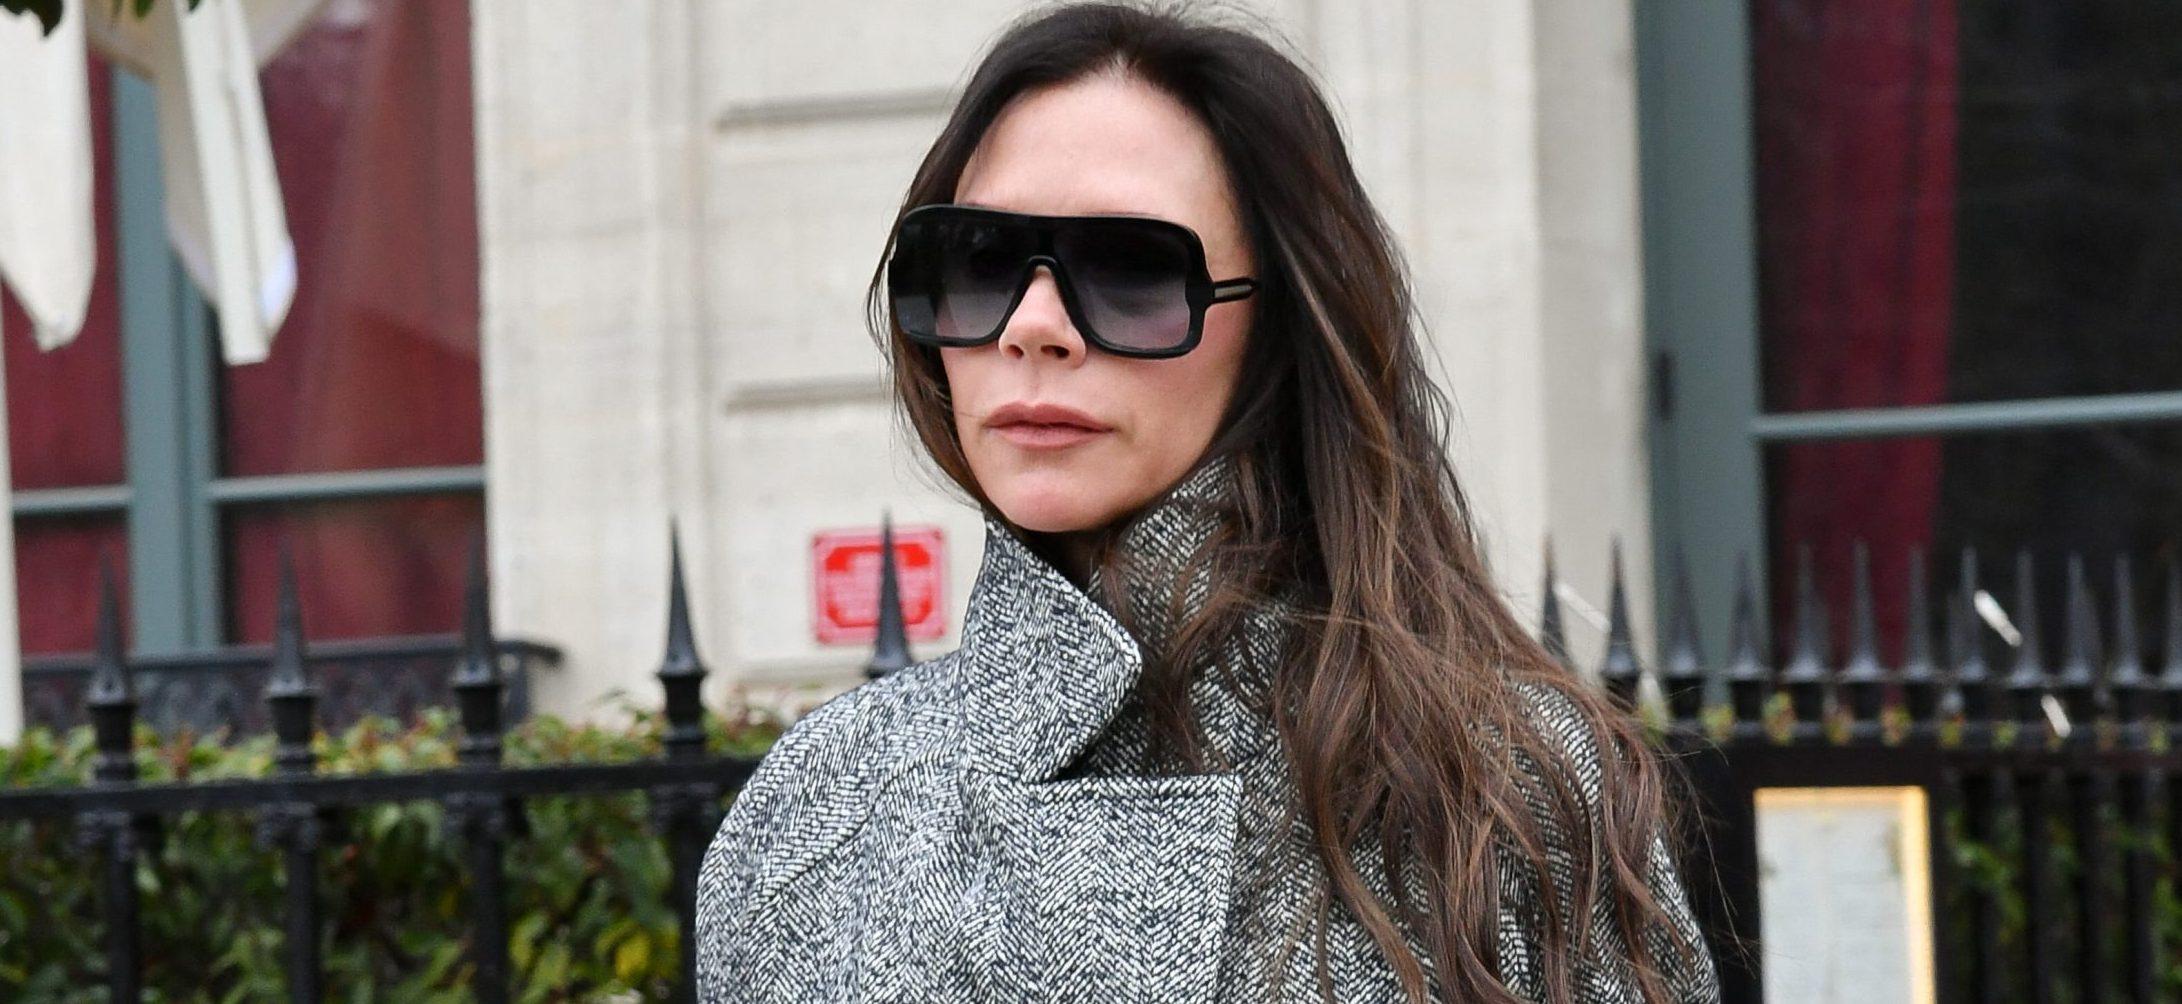 Victoria Beckham is seen leaving hotel during Paris fashion week